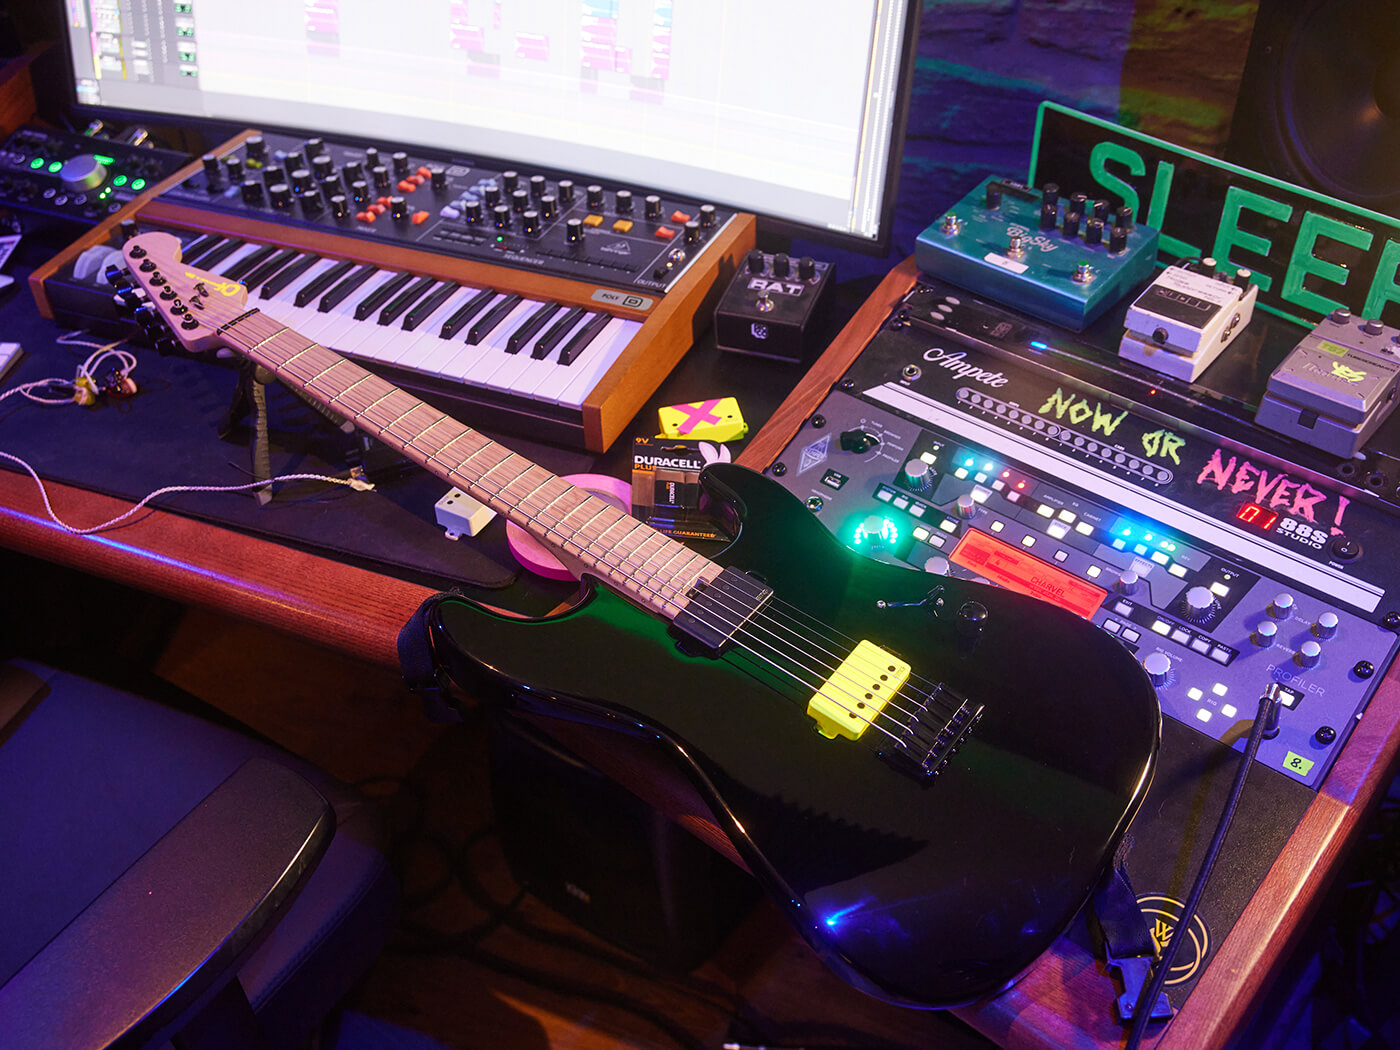 Sean Long of While She Sleeps' Charvel Signature Guitar